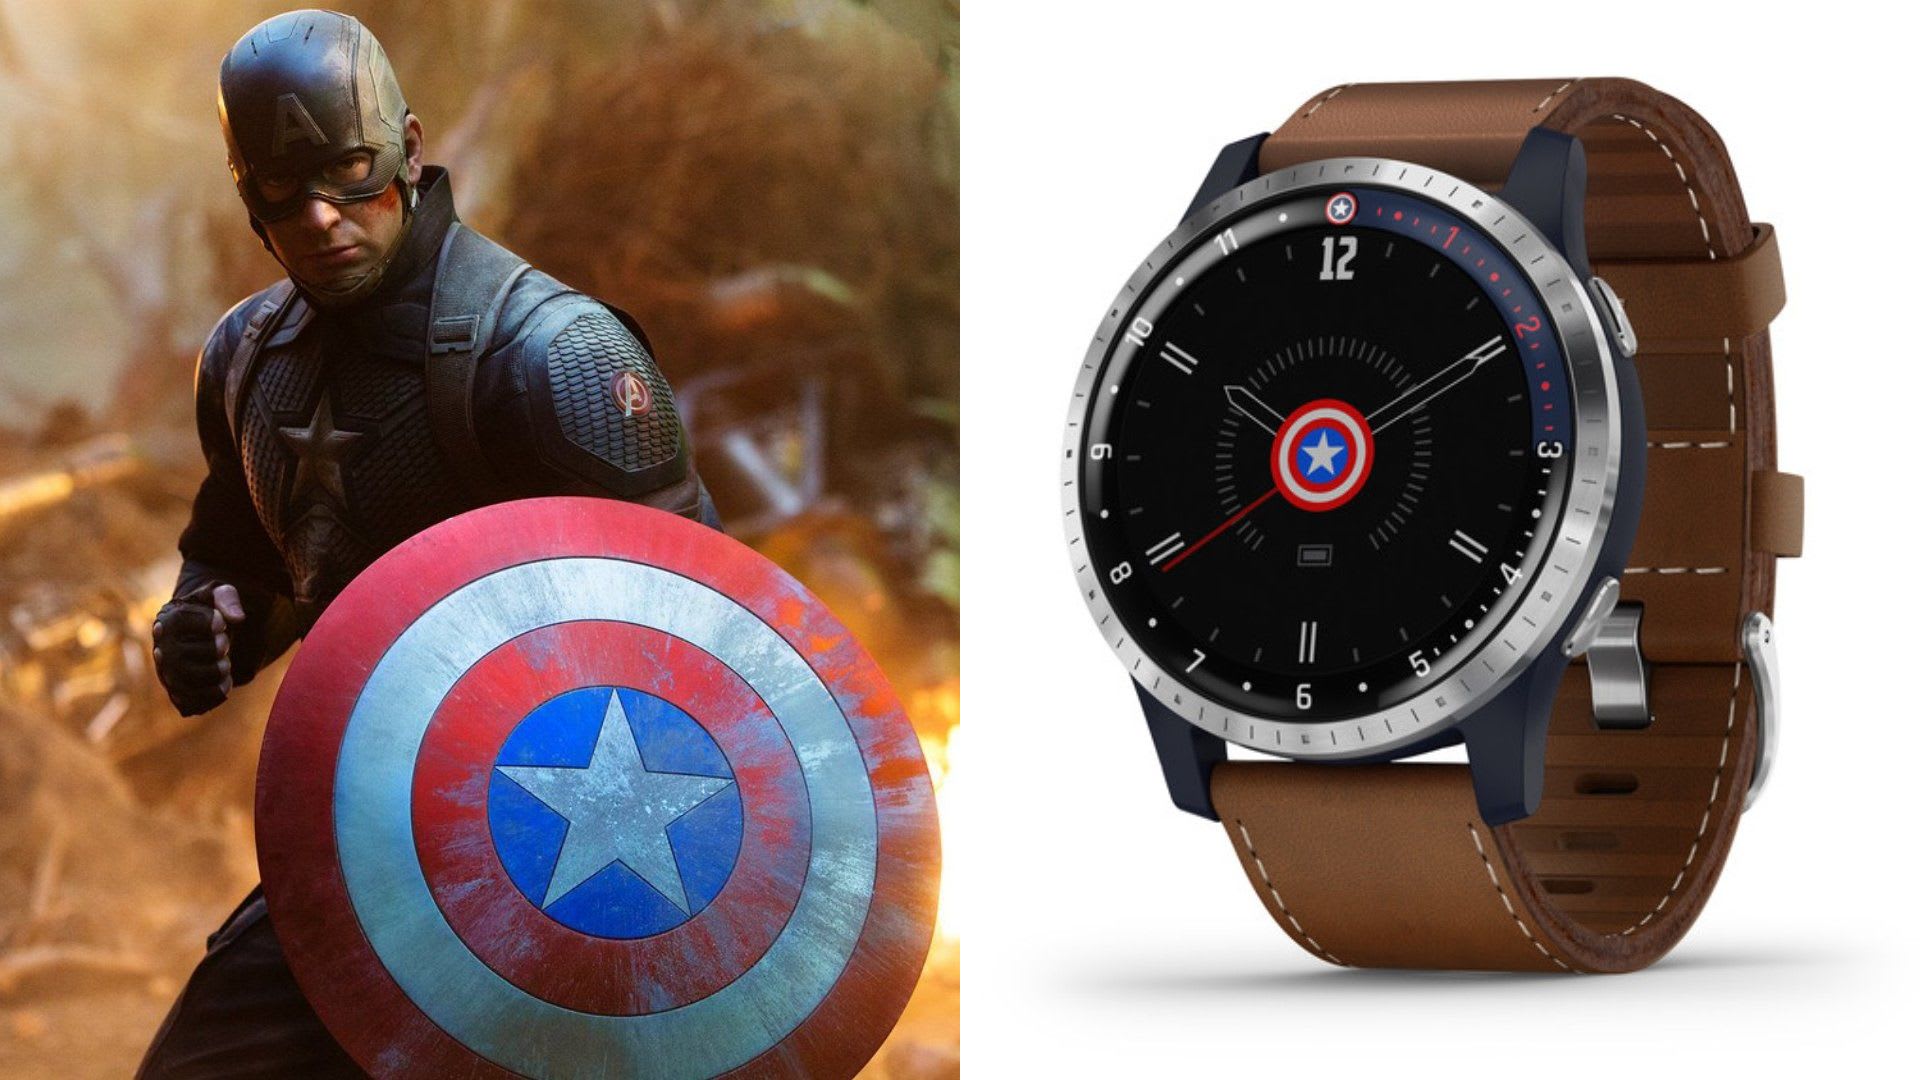 Série chytrých hodinek Garmin s hrdiny Avengers